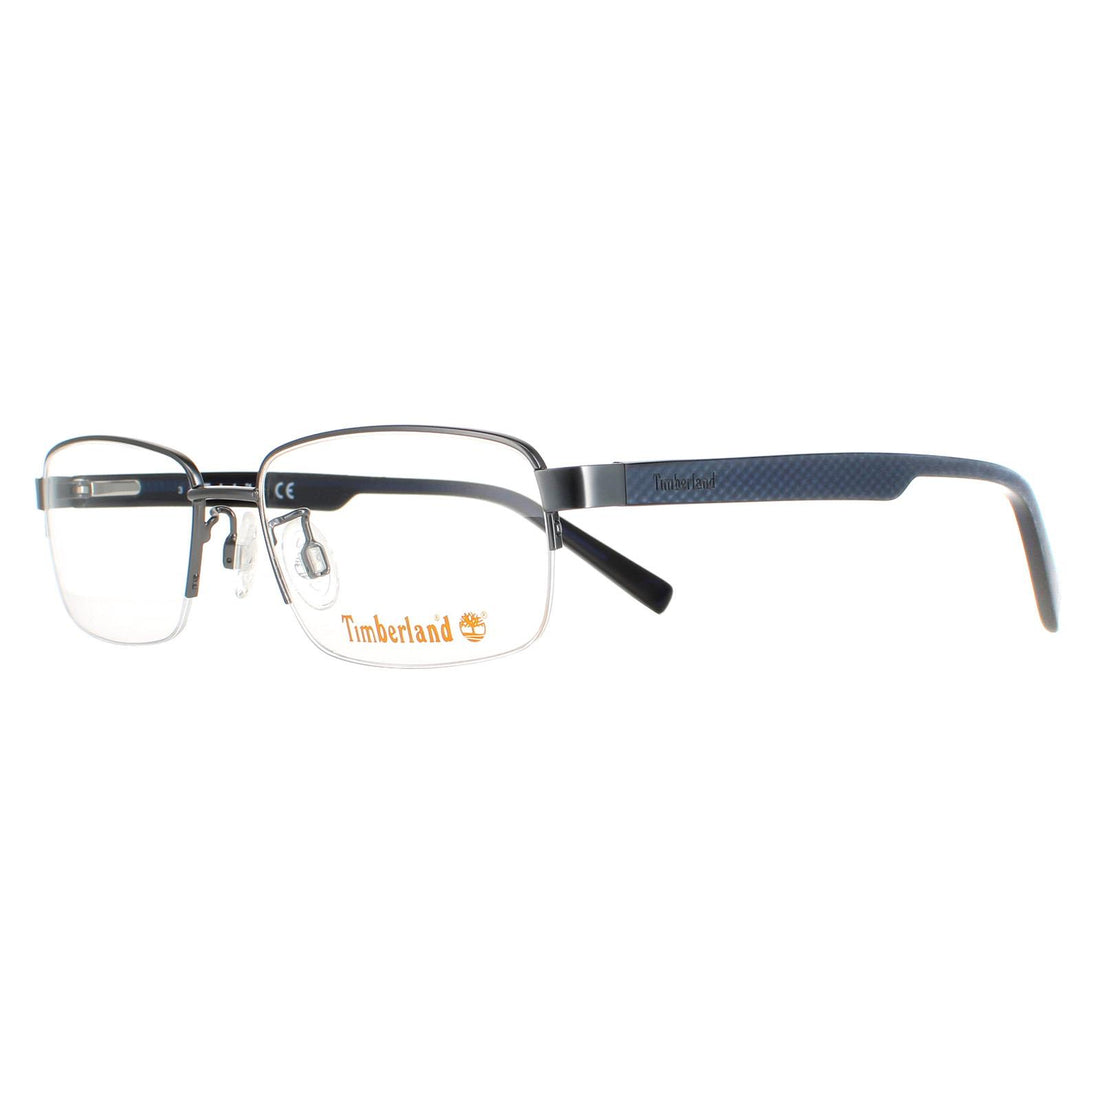 Timberland Glasses Frames TB1548 009 Matte Gunmetal Men